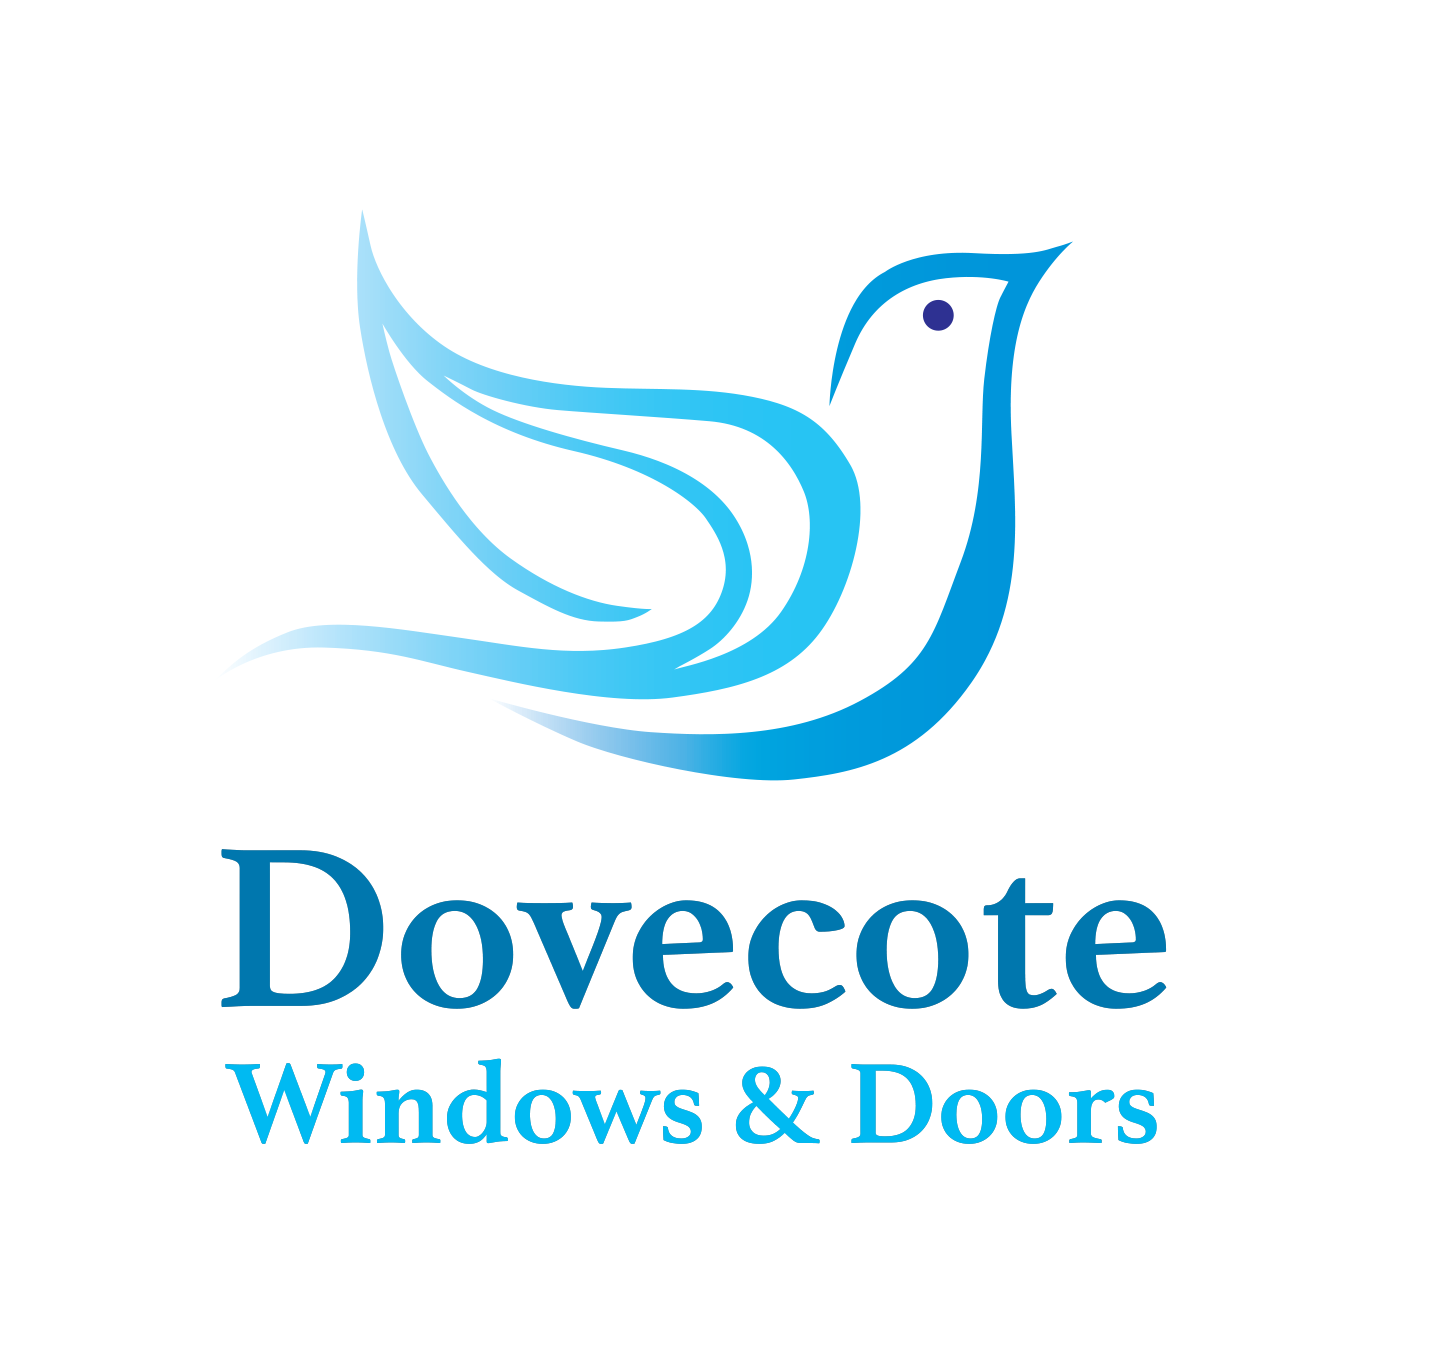 Dovecote-Windows-Doors-logo.png